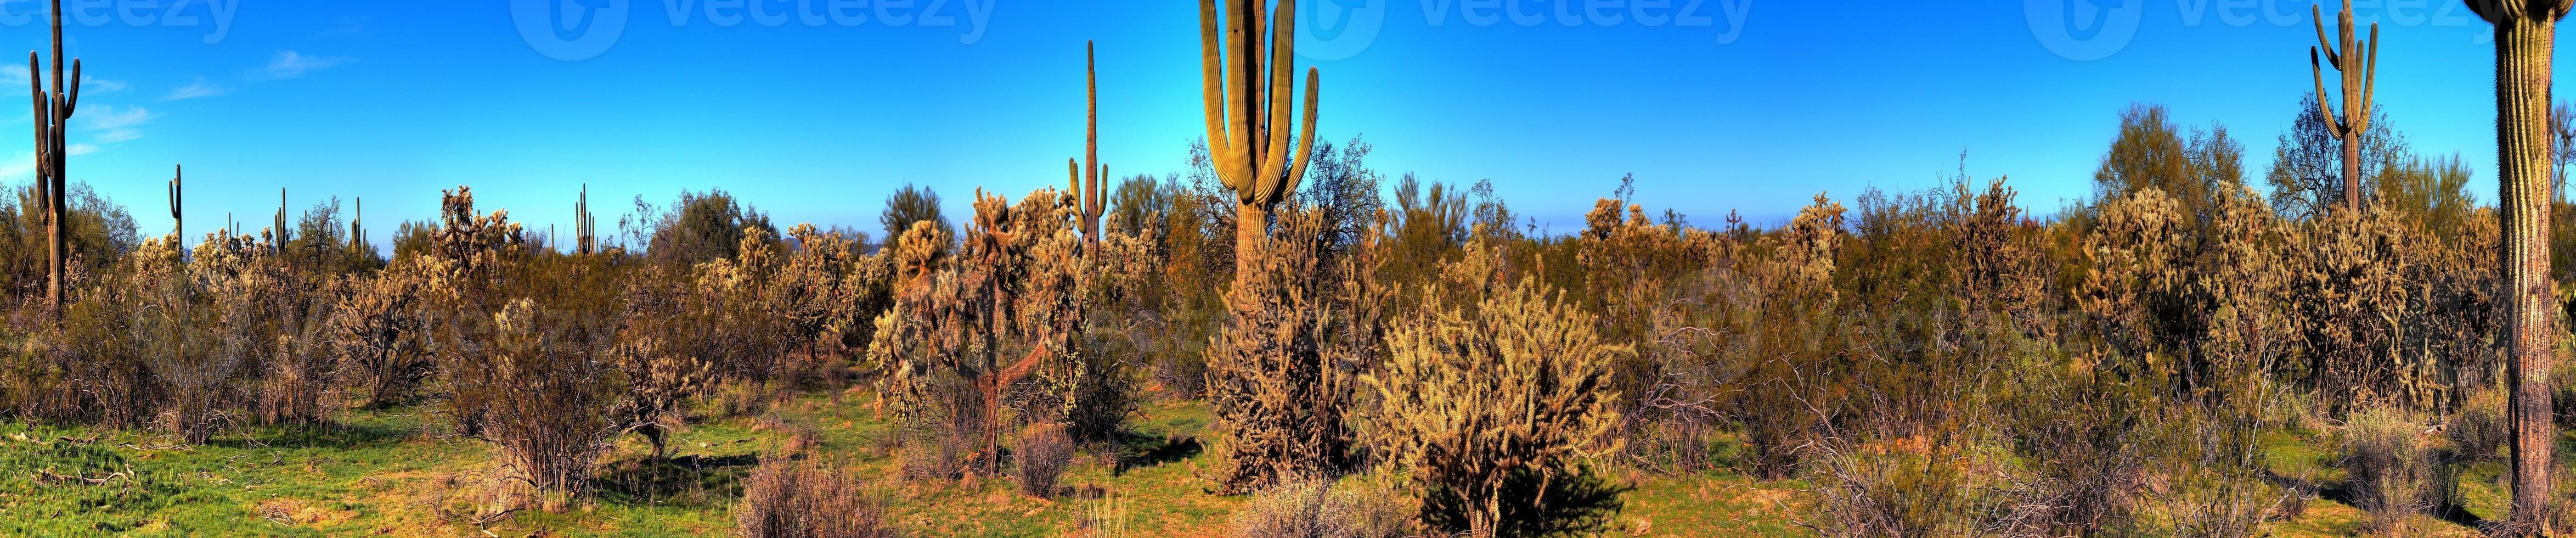 panorama de cactus saguaro desierto foto